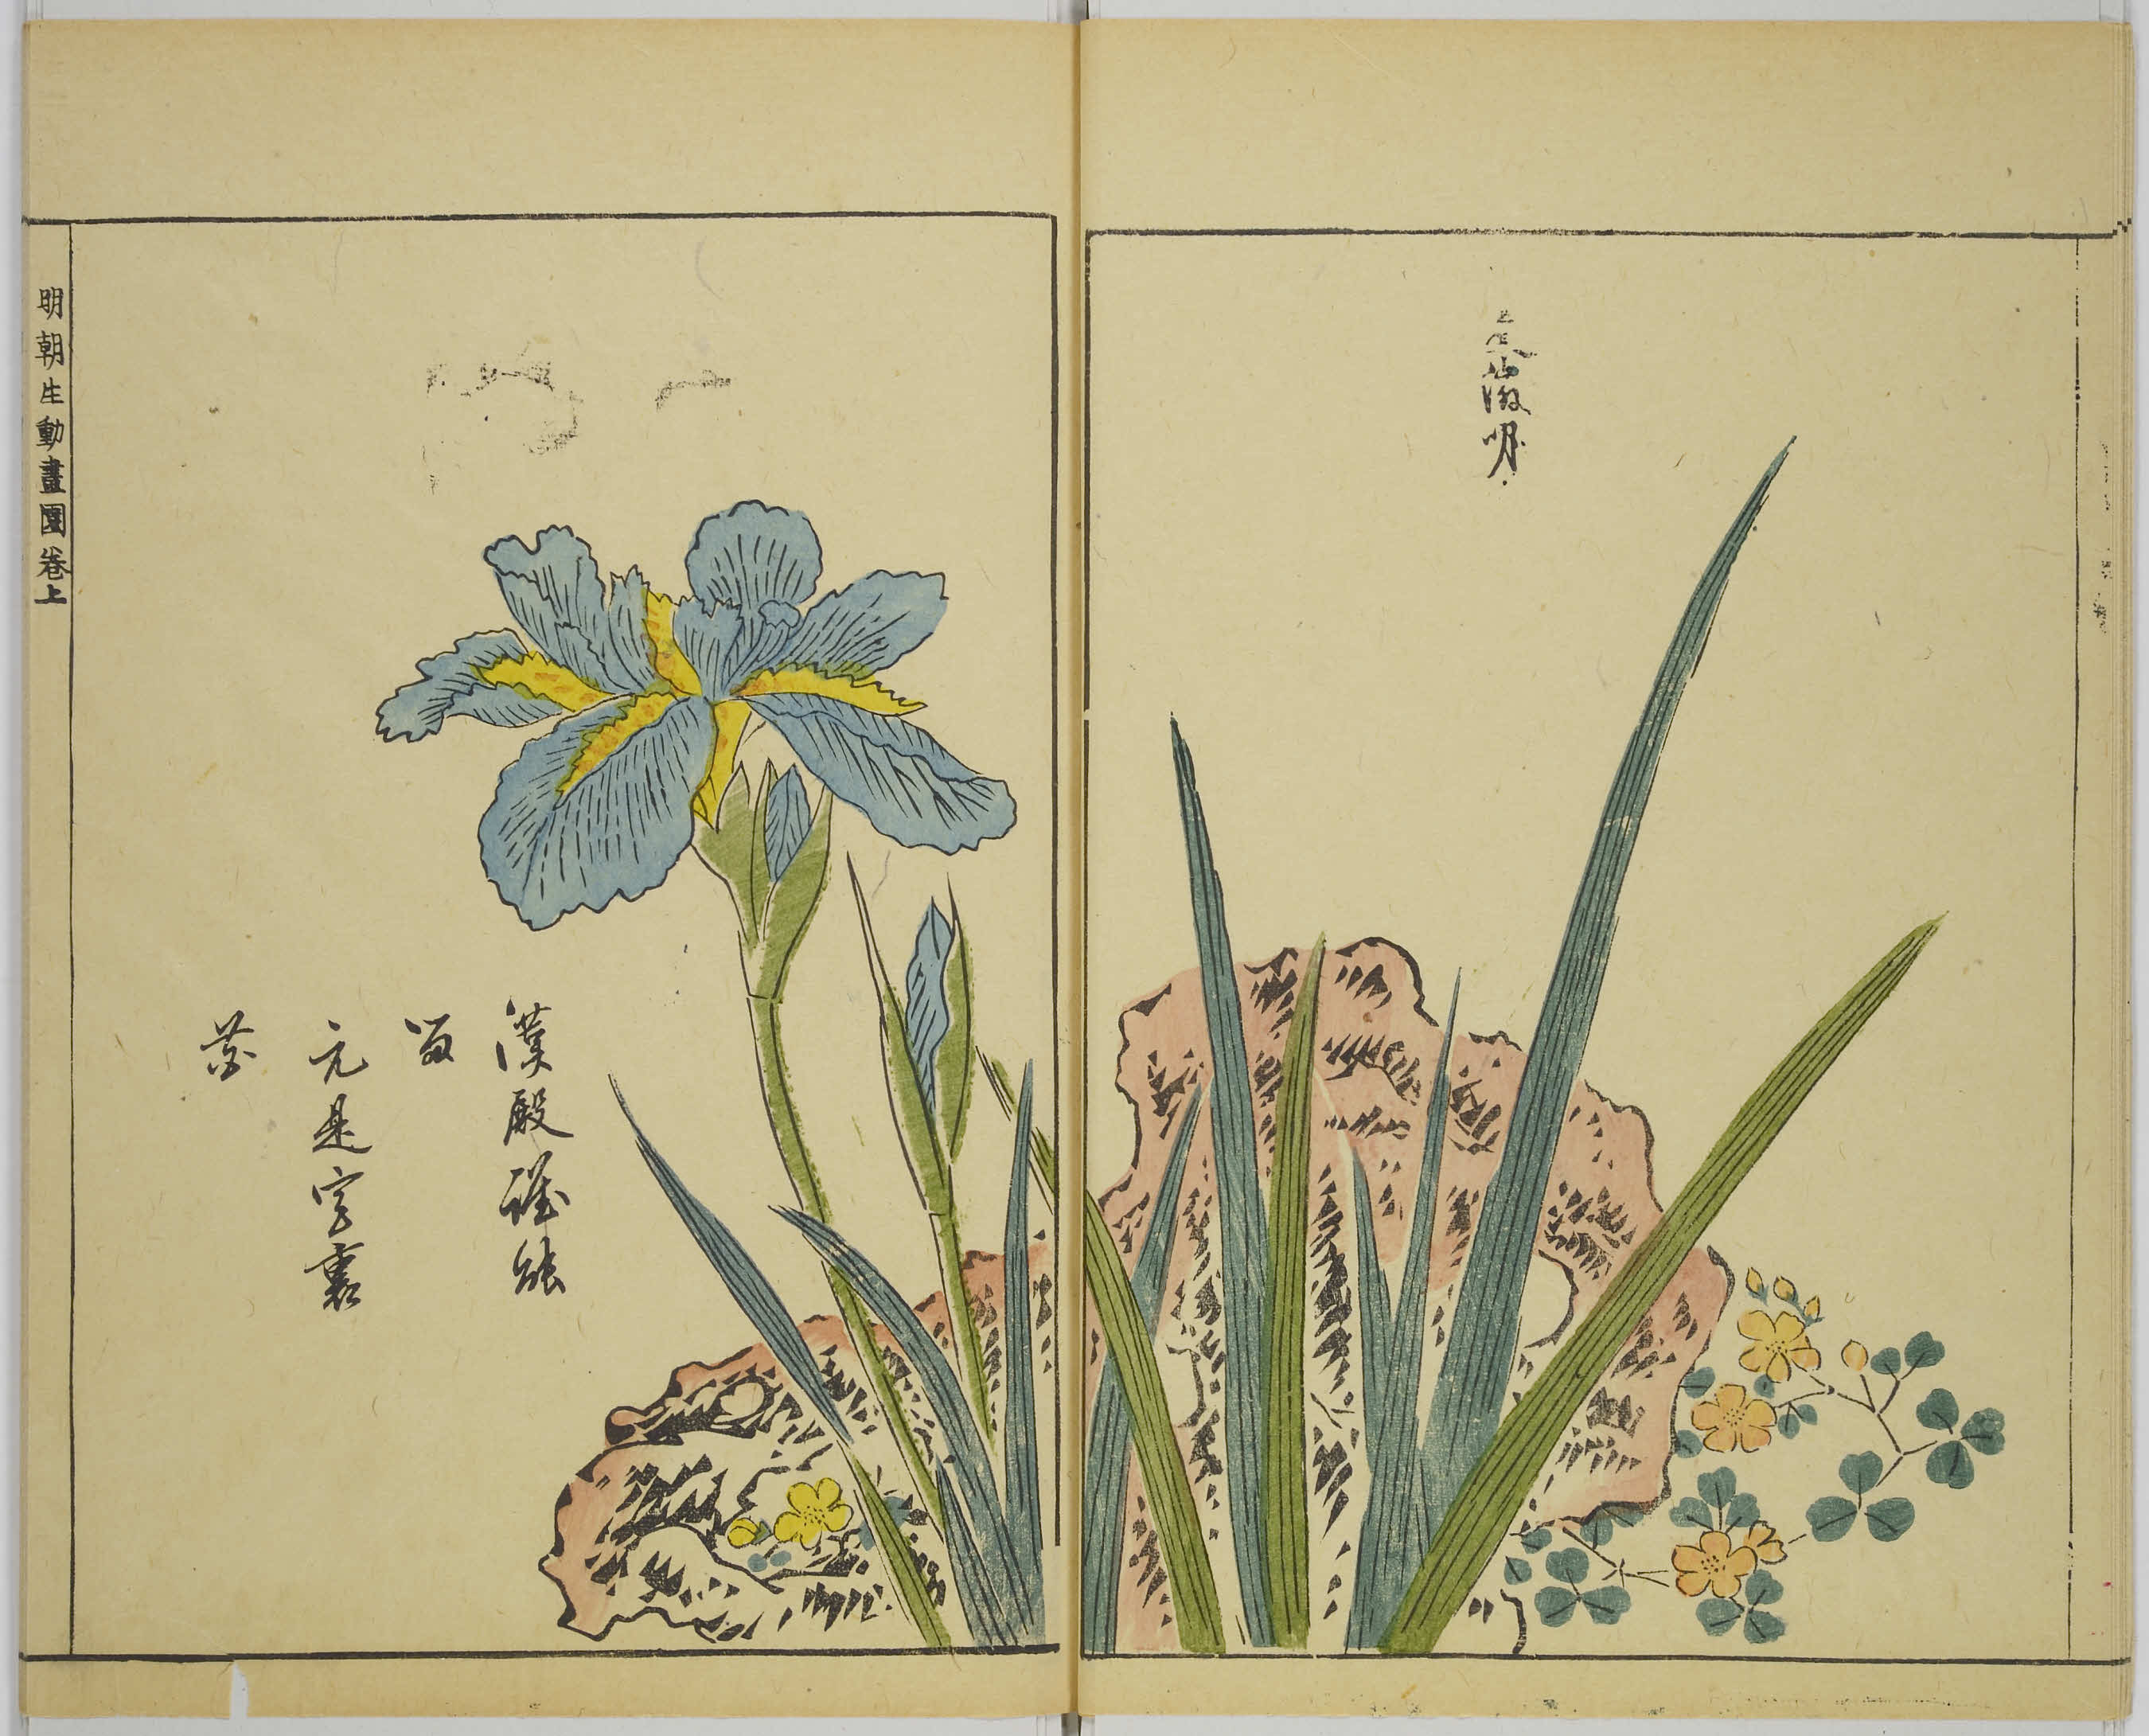 B1.3 本格的な日本画譜の嚆矢と技術の発展